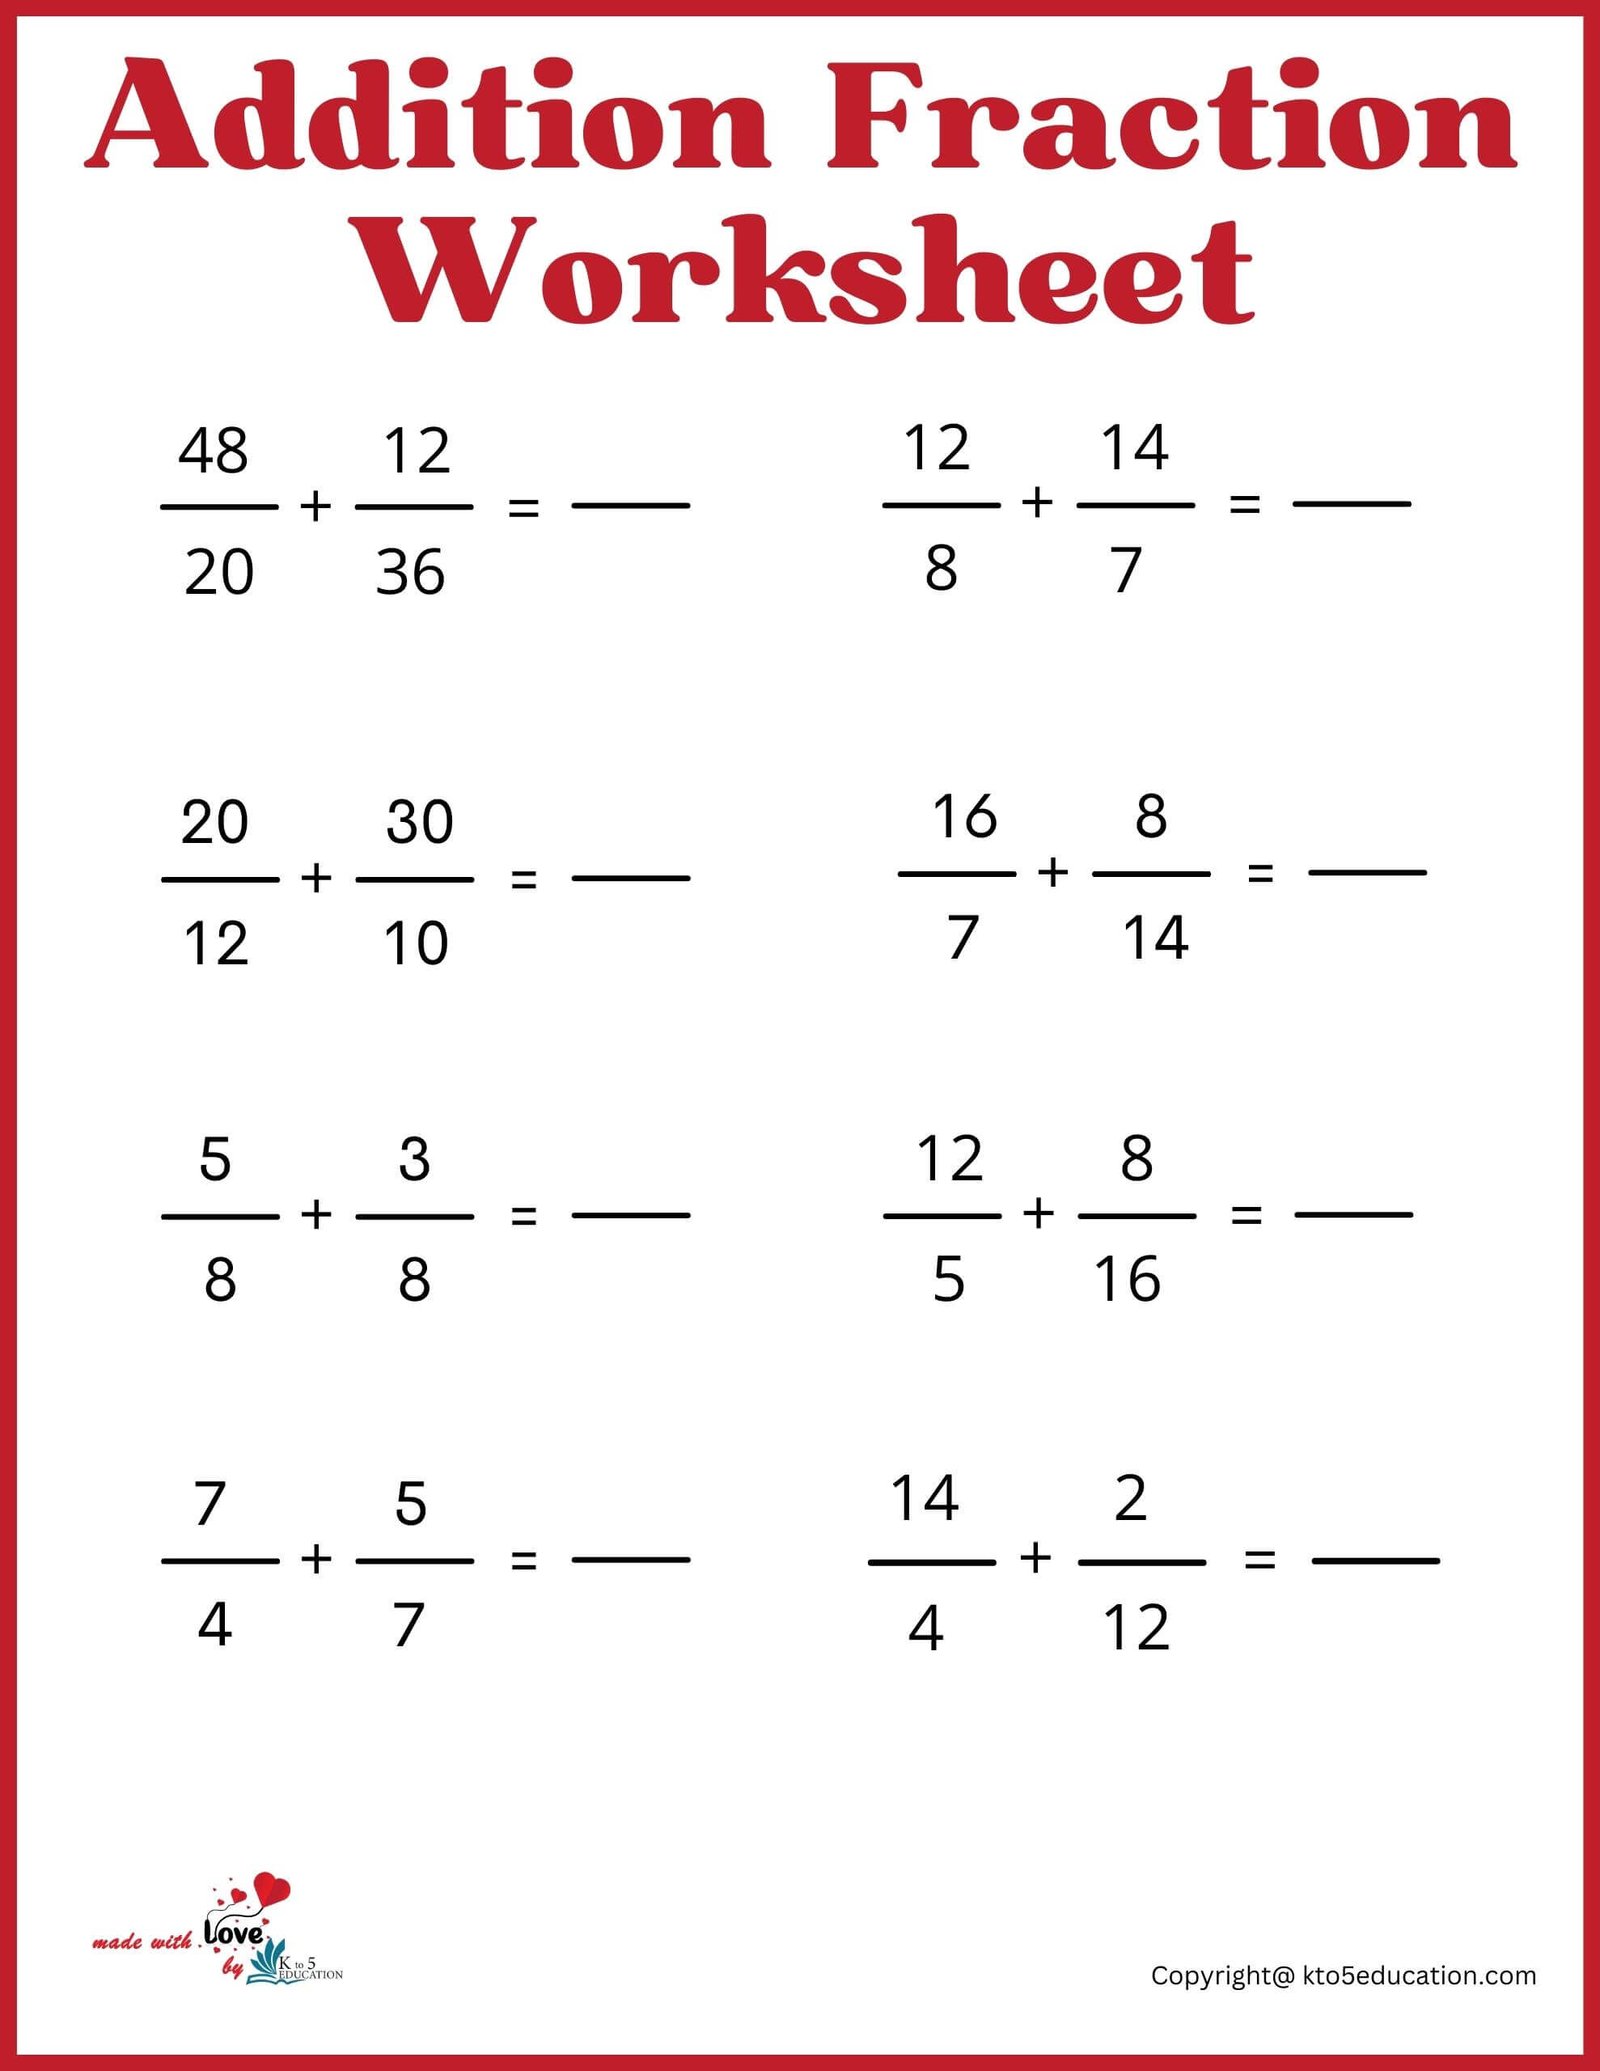 Free Addition Fraction Worksheet For Fourth Grade